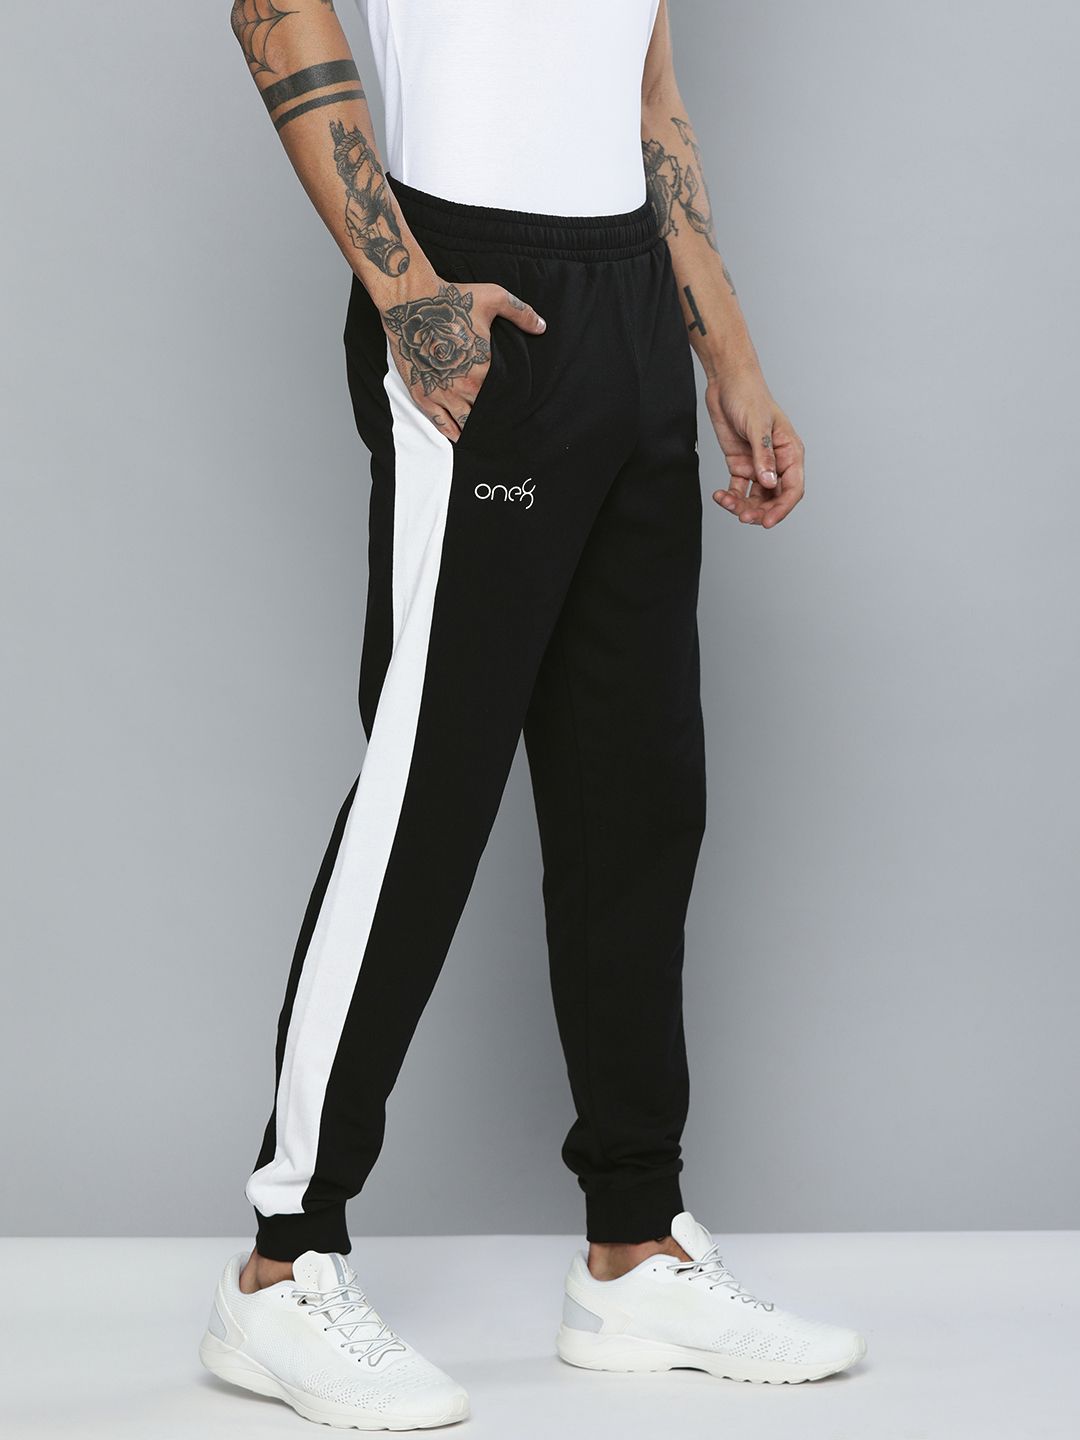 Puma Mens VK Sweat Pants, Black, Medium : Amazon.in: Fashion